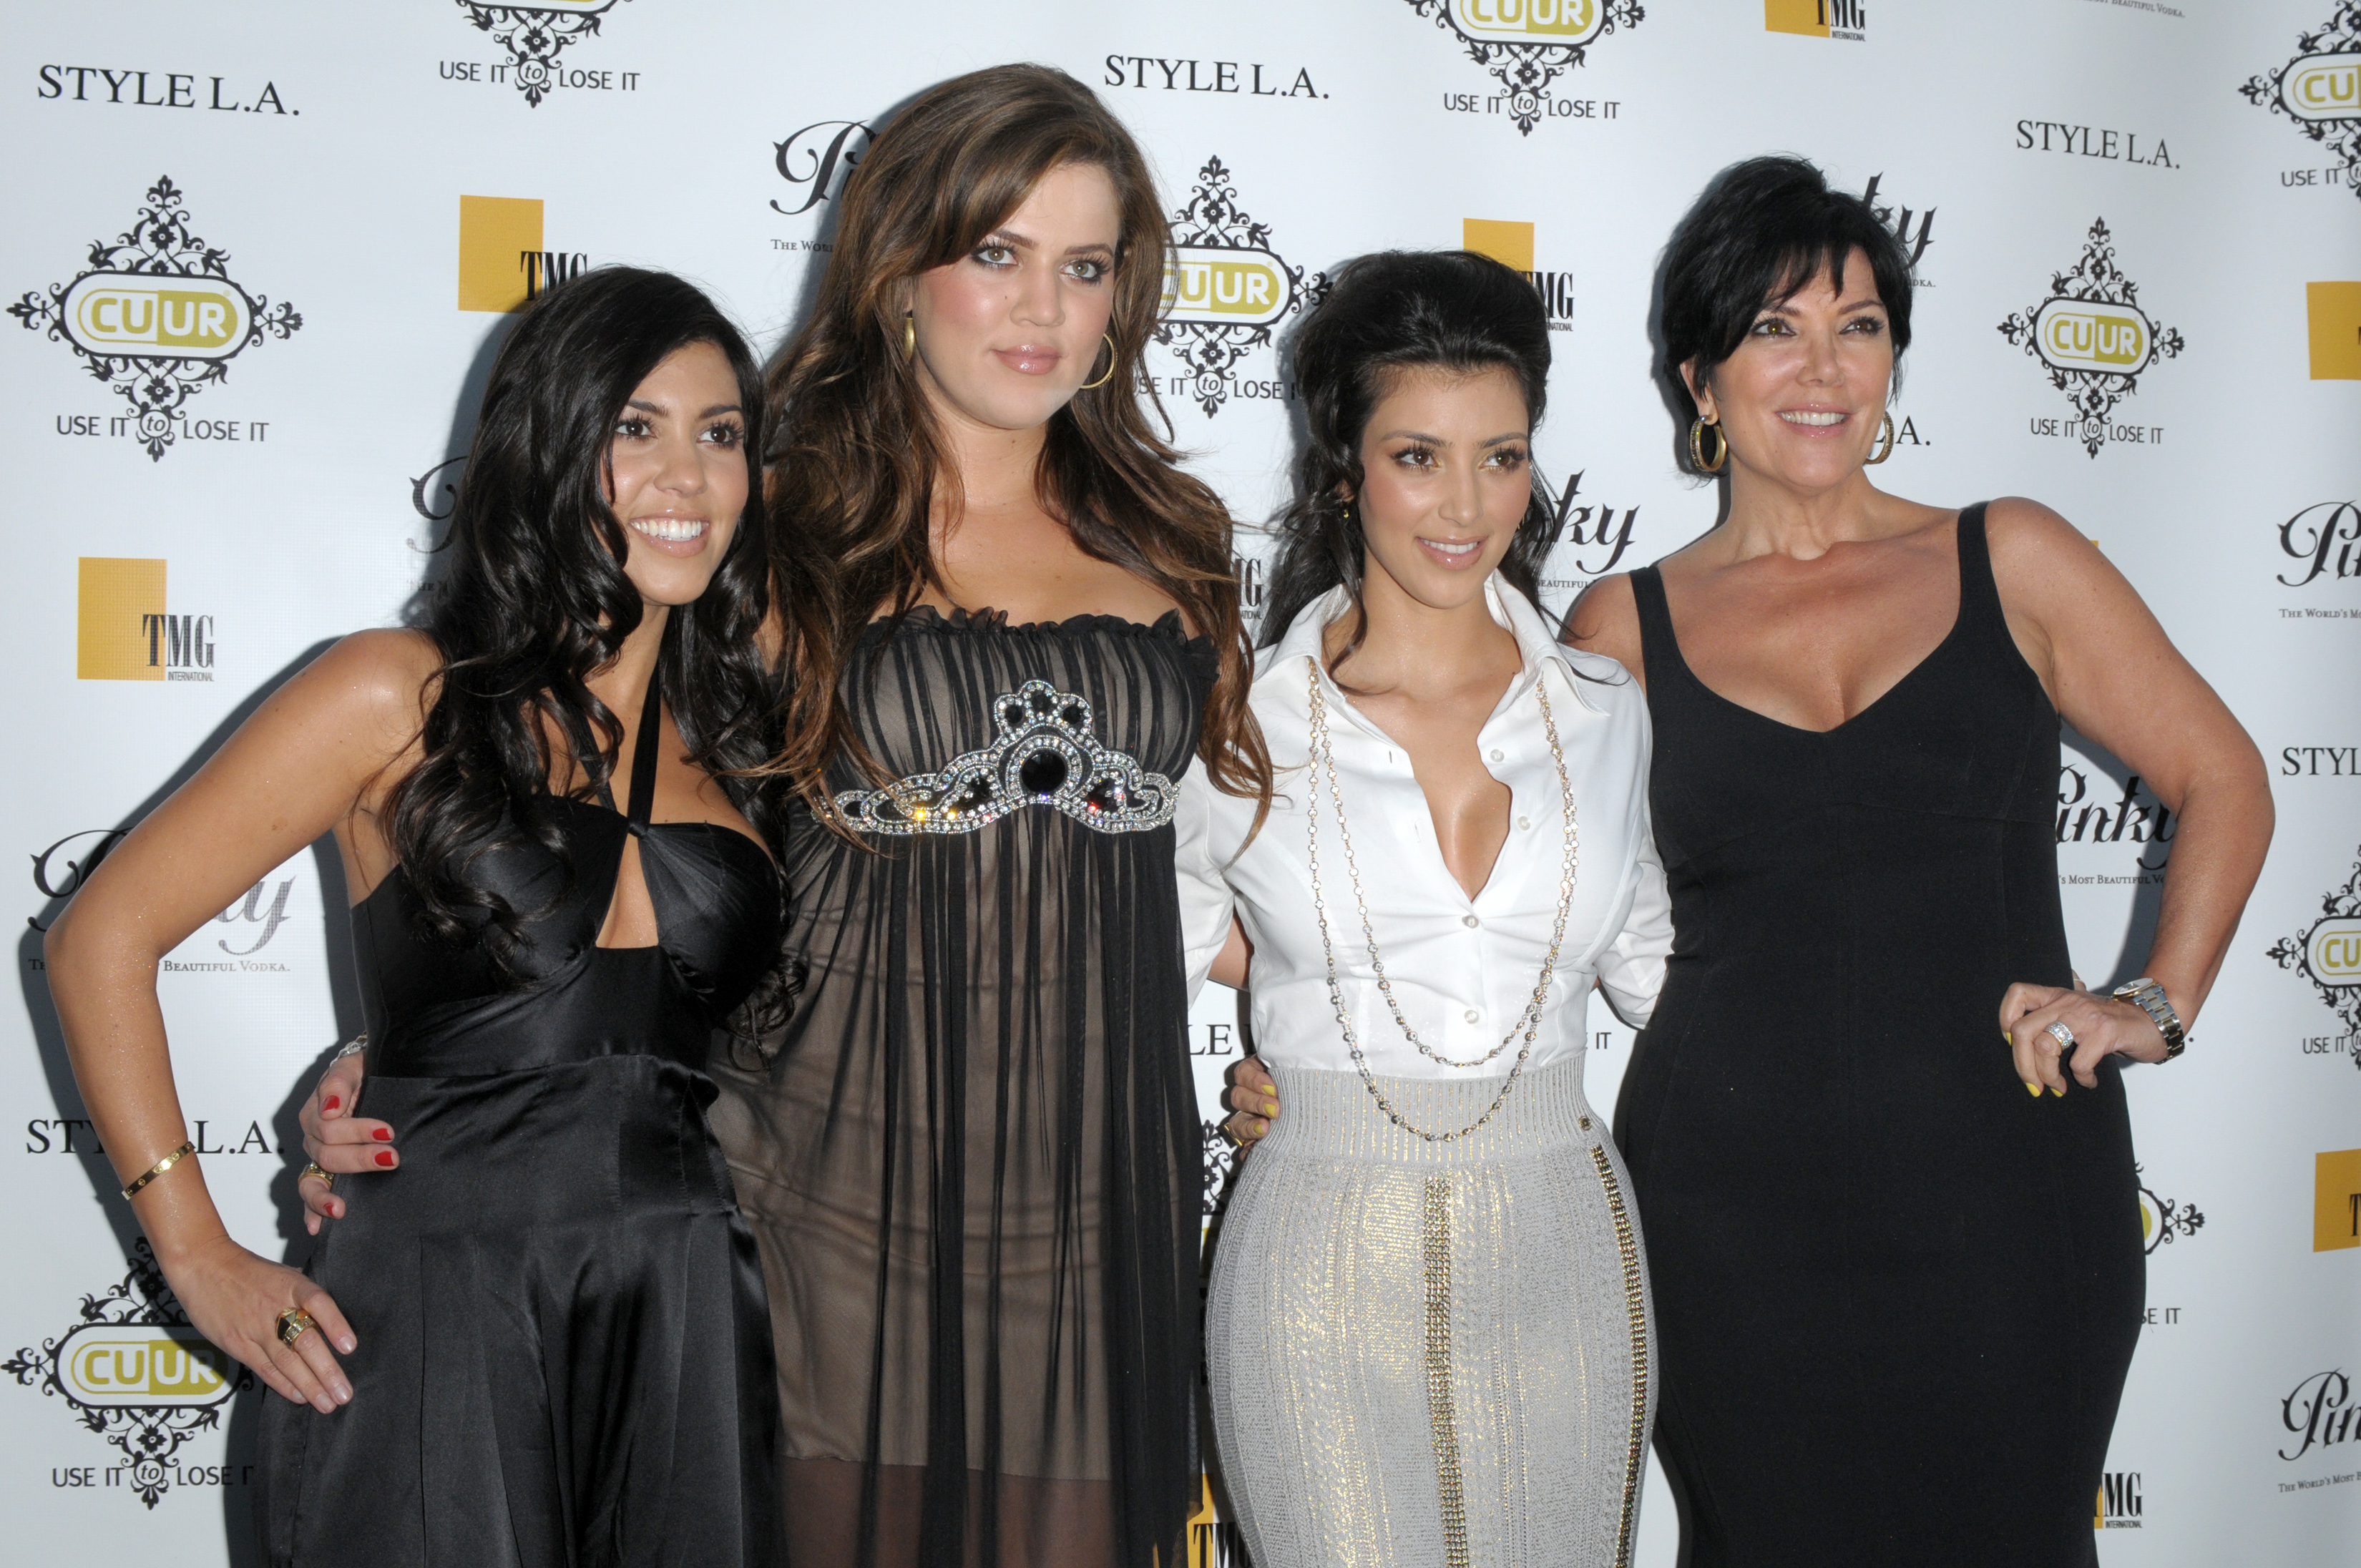 Khloé, Kourtney, and Kim Kardashian with Kris smiling at a media event